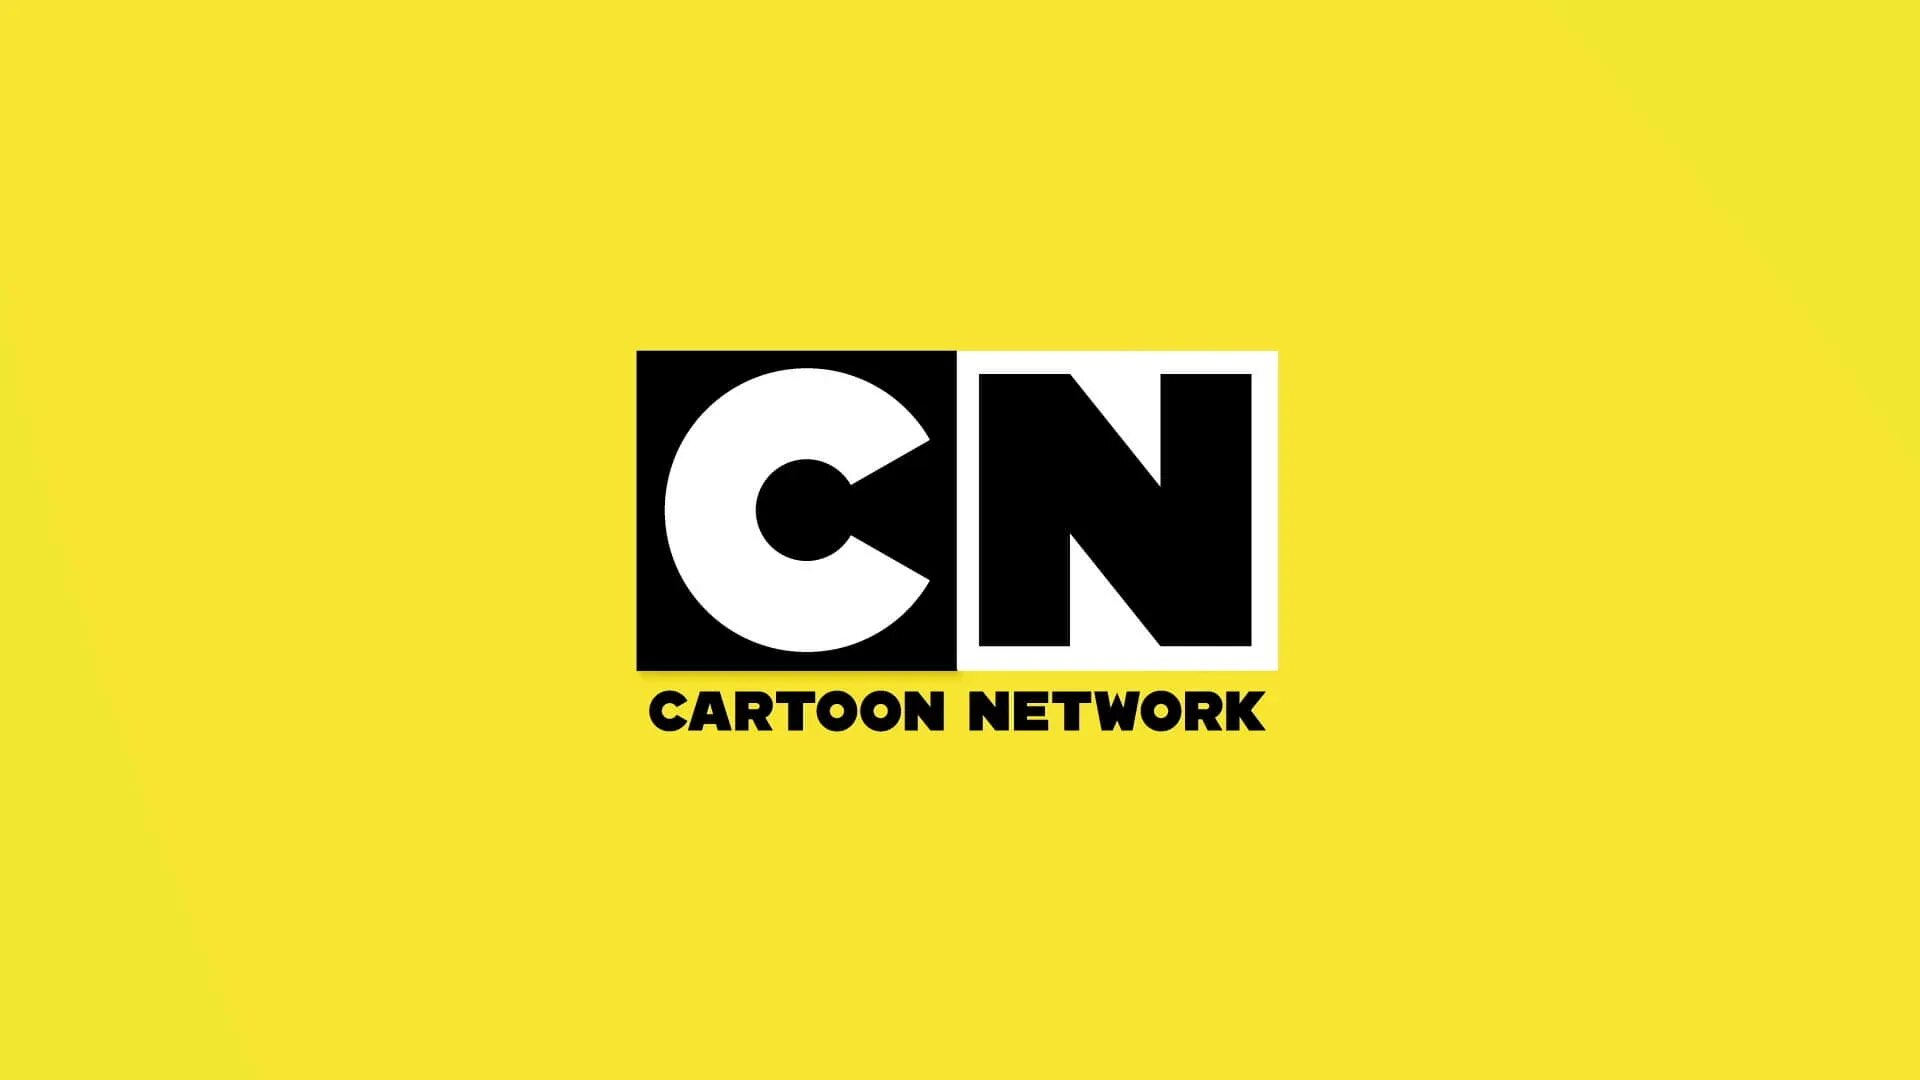 Cartoon network türkiye. Картун нетворк. Картун нетворк лого. Телеканал cartoon Network. CN cartoon Network logo.